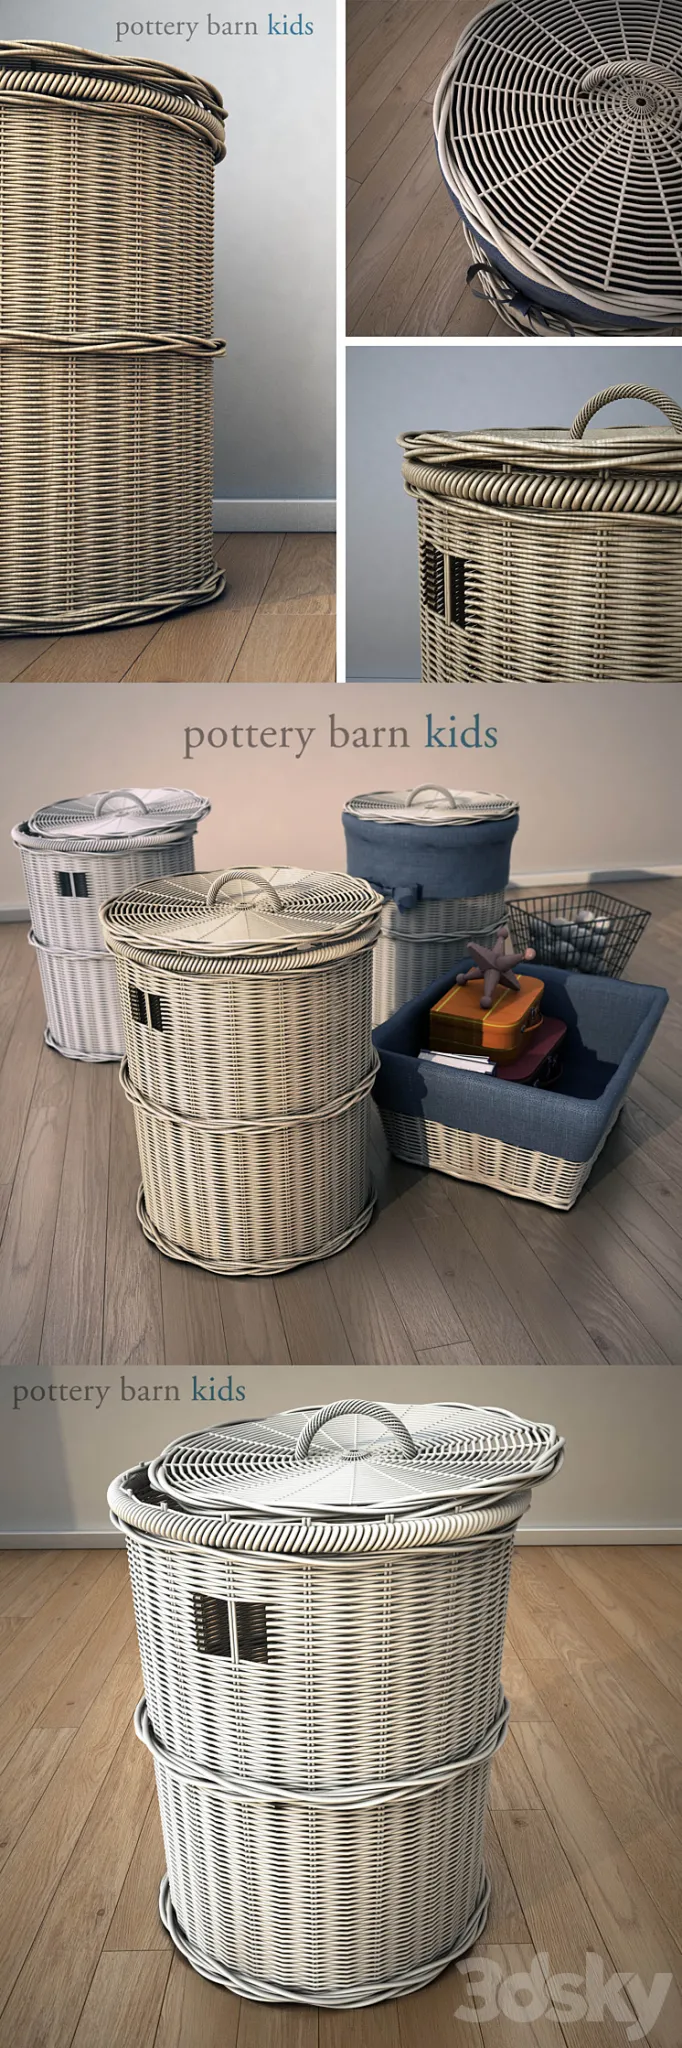 Pottery barn kids basket. 3DS Max